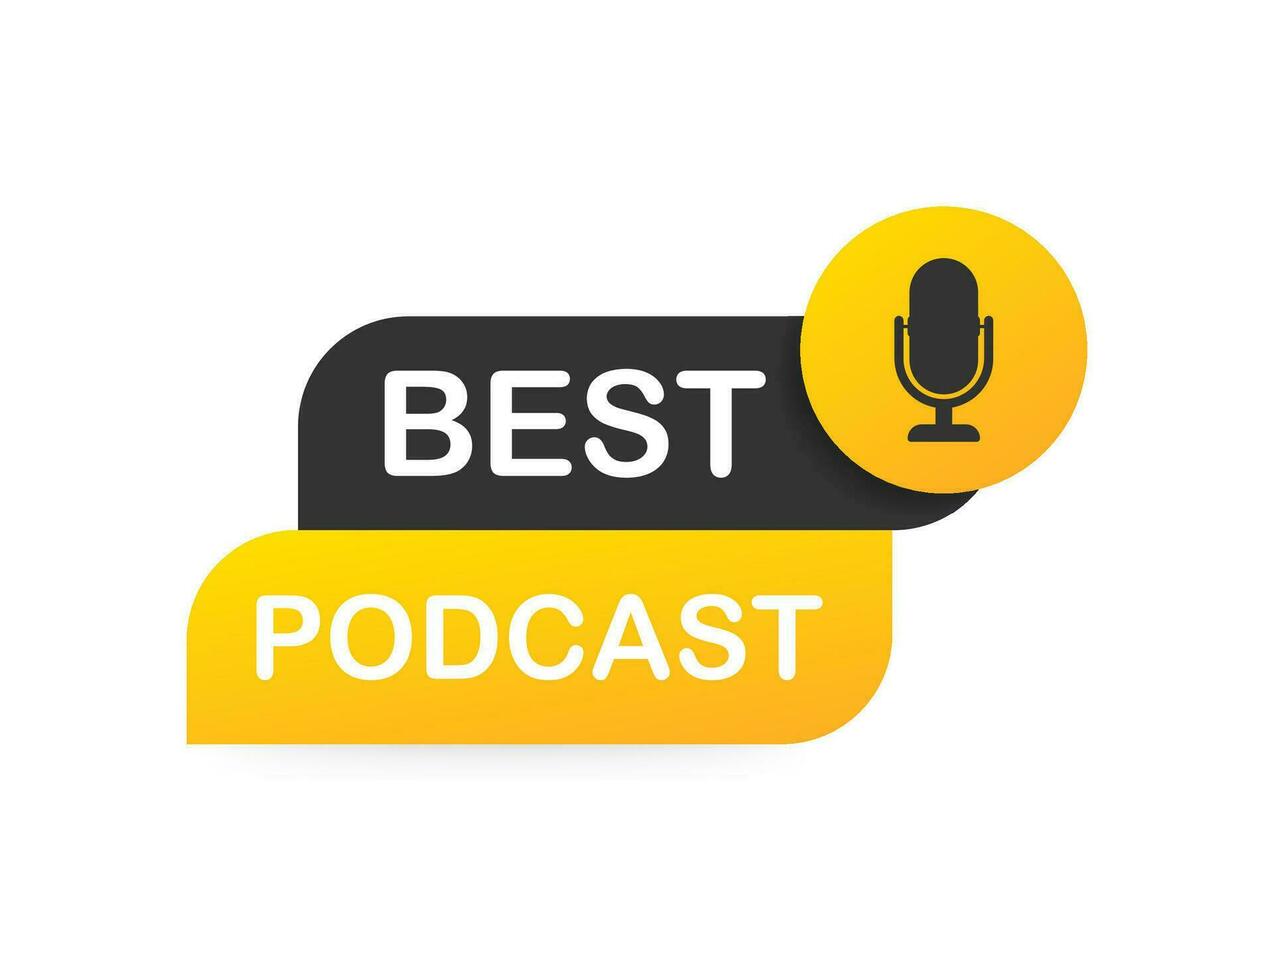 Beste Podcast. Abzeichen, Symbol, Briefmarke Logo Vektor Lager Illustration